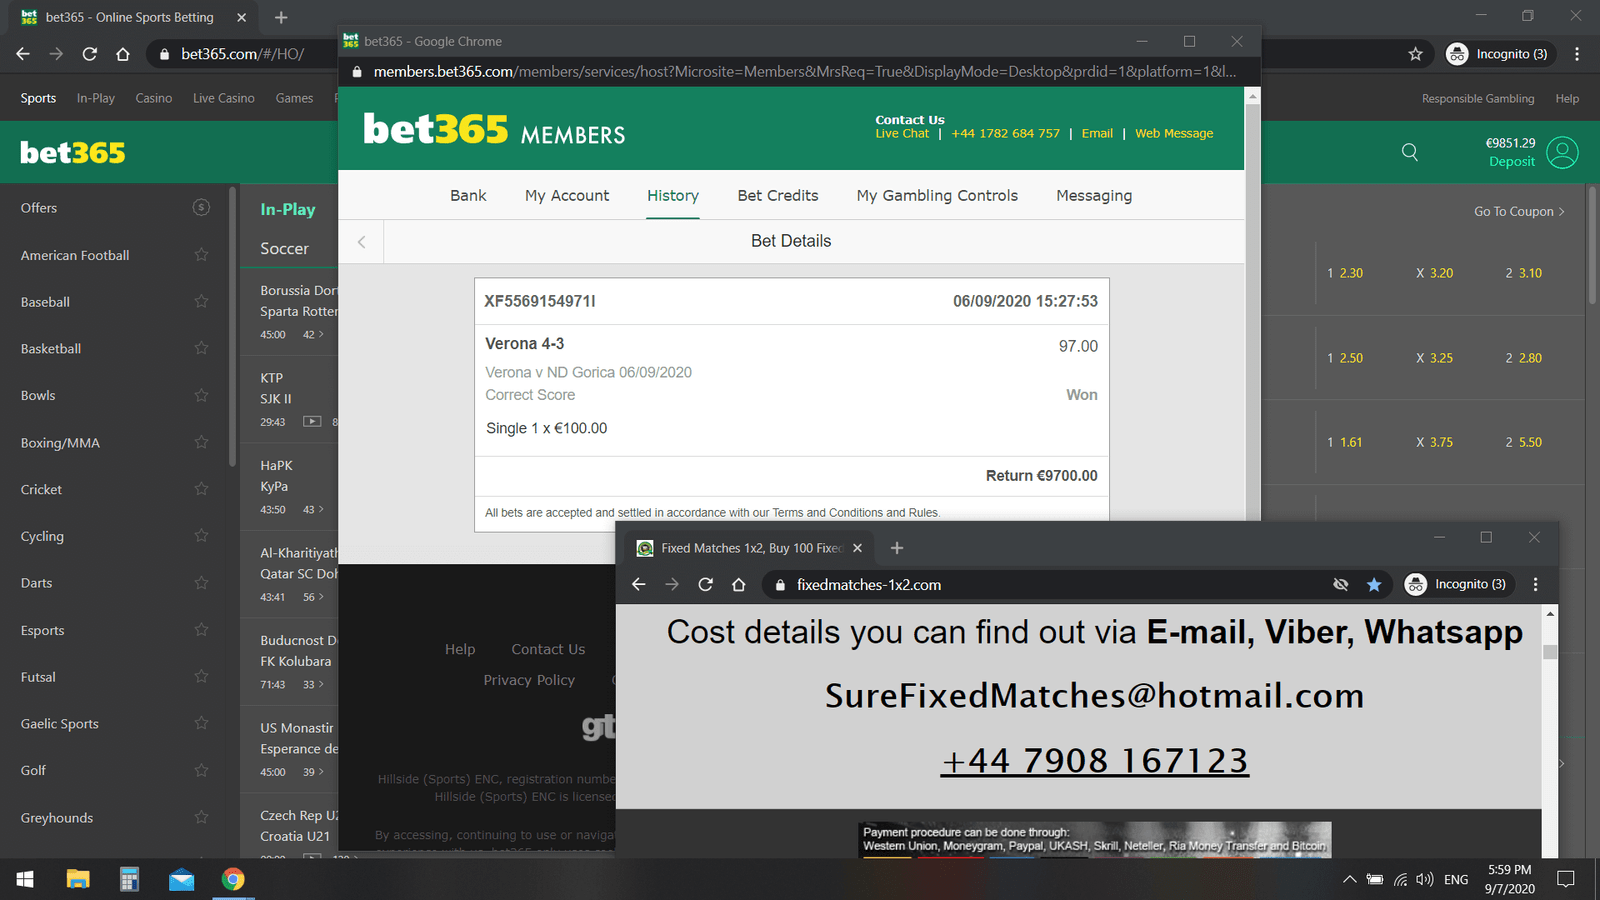 fixed matches correct score won 06 09